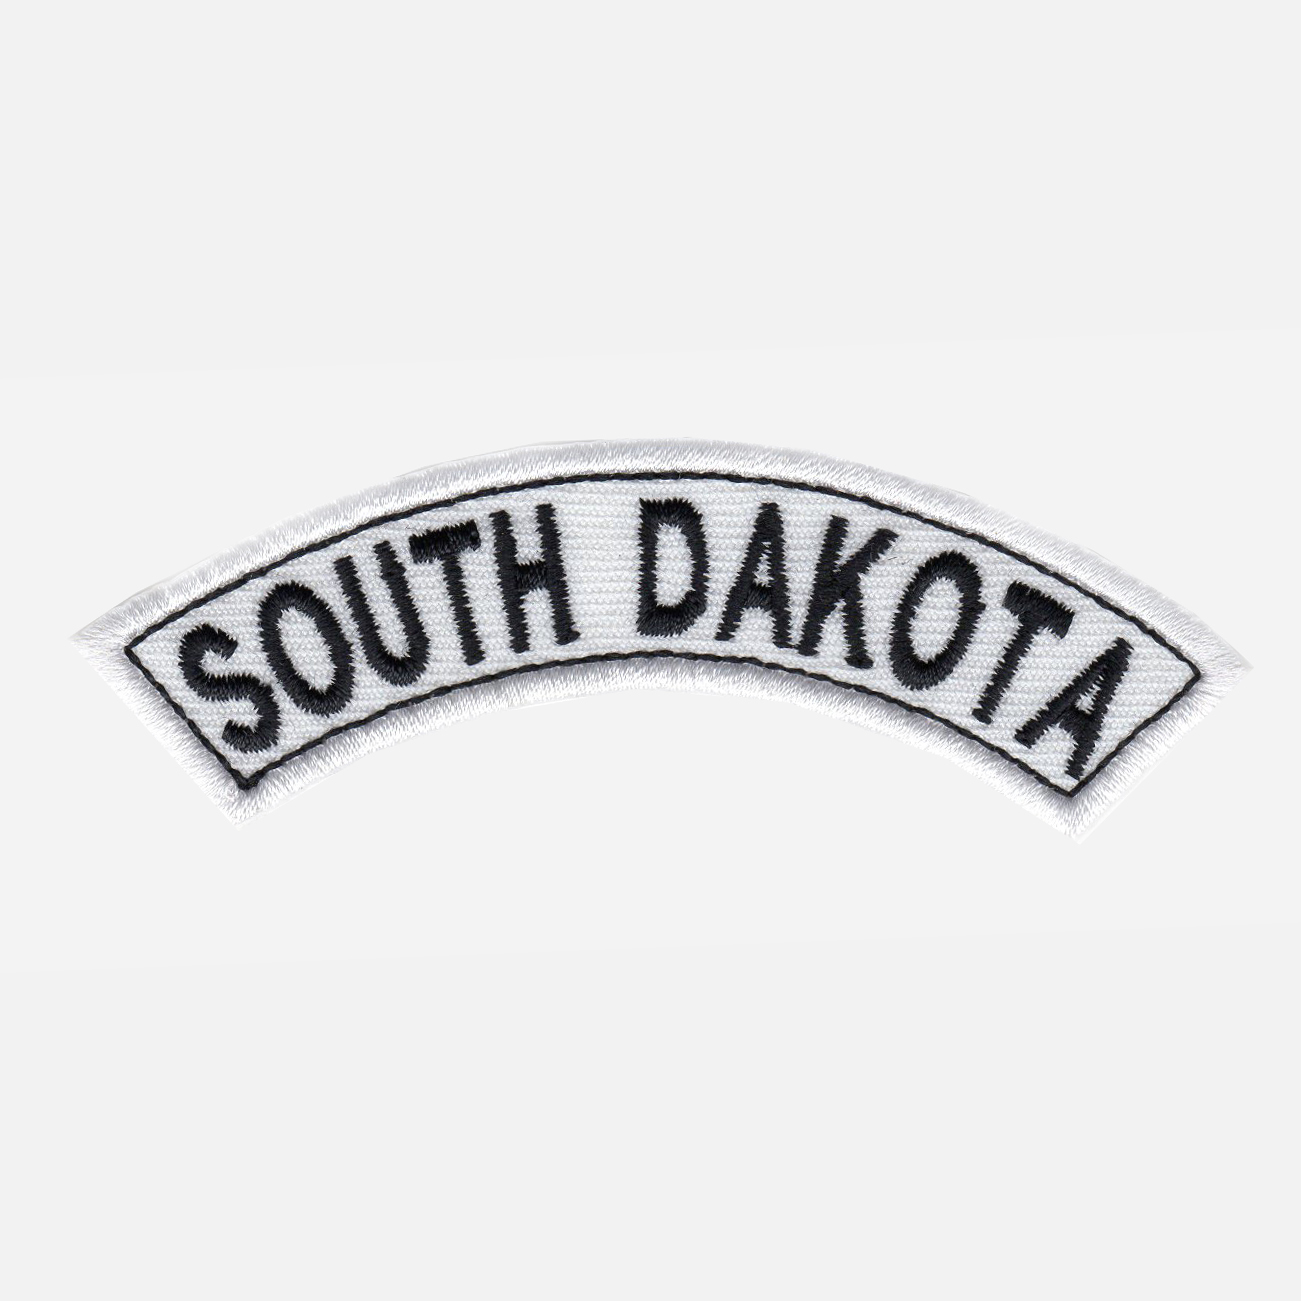 South Dakota Mini Top Rocker Embroidered Vest Patch